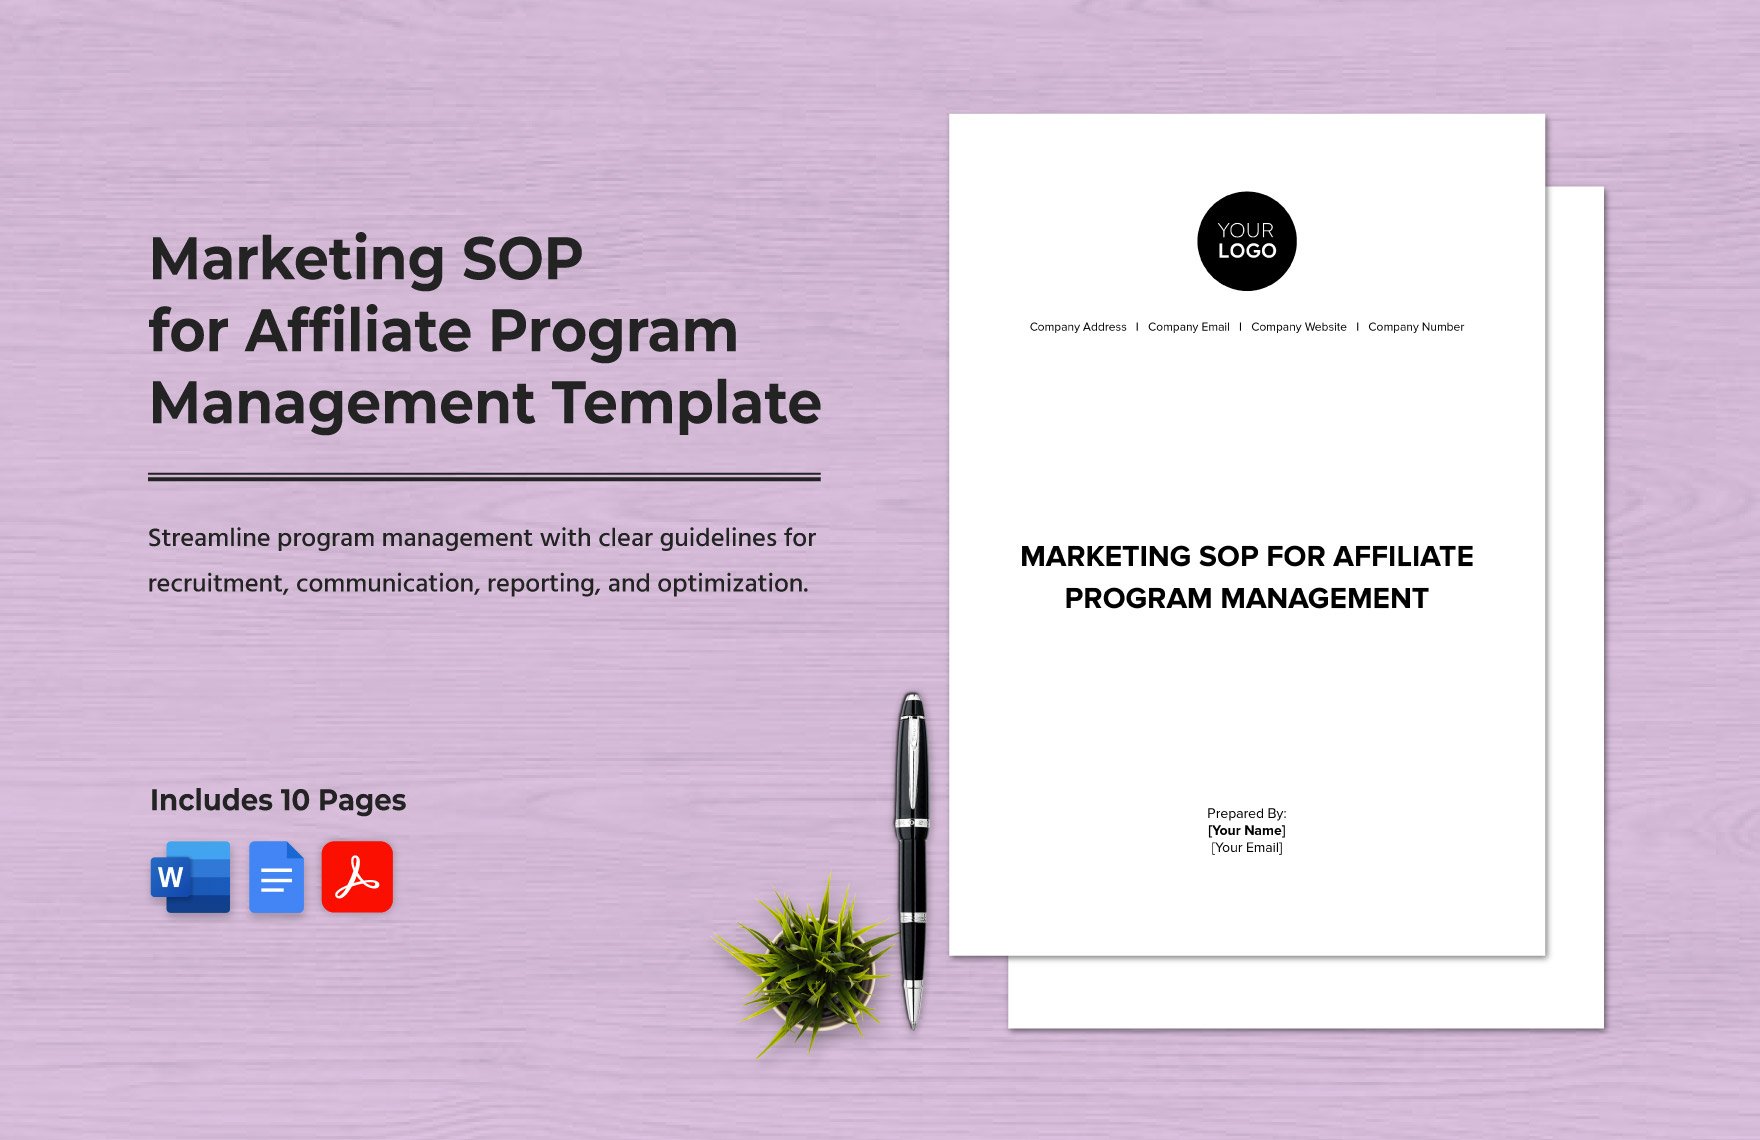 Marketing SOP for Affiliate Program Management Template